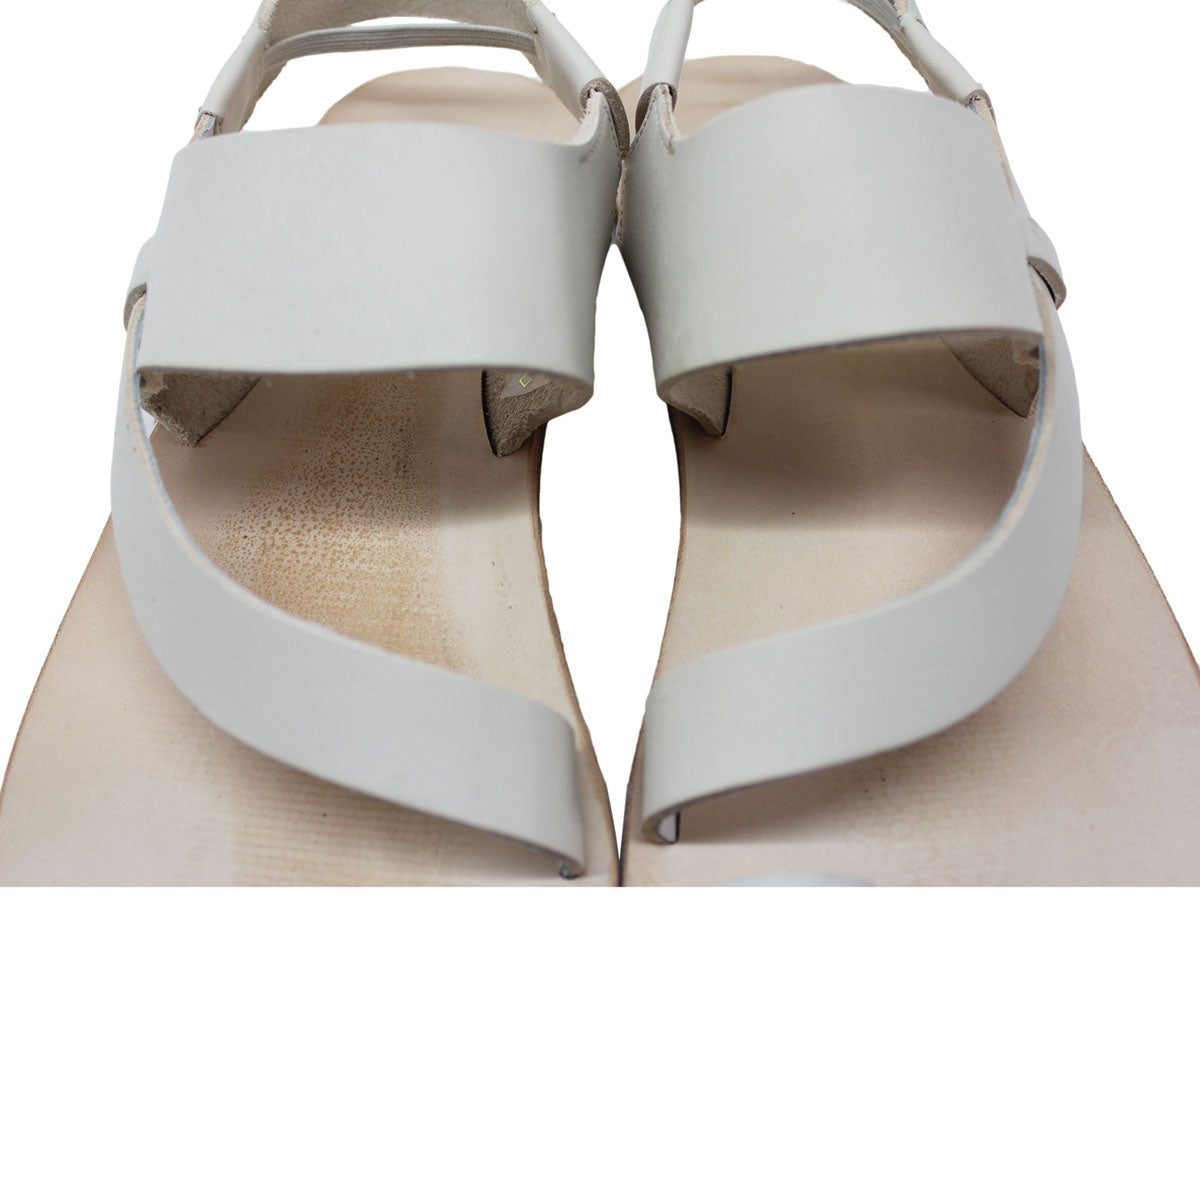 Vivobarefoot Womens Opanka 203225 Leather Sandals - UK 6